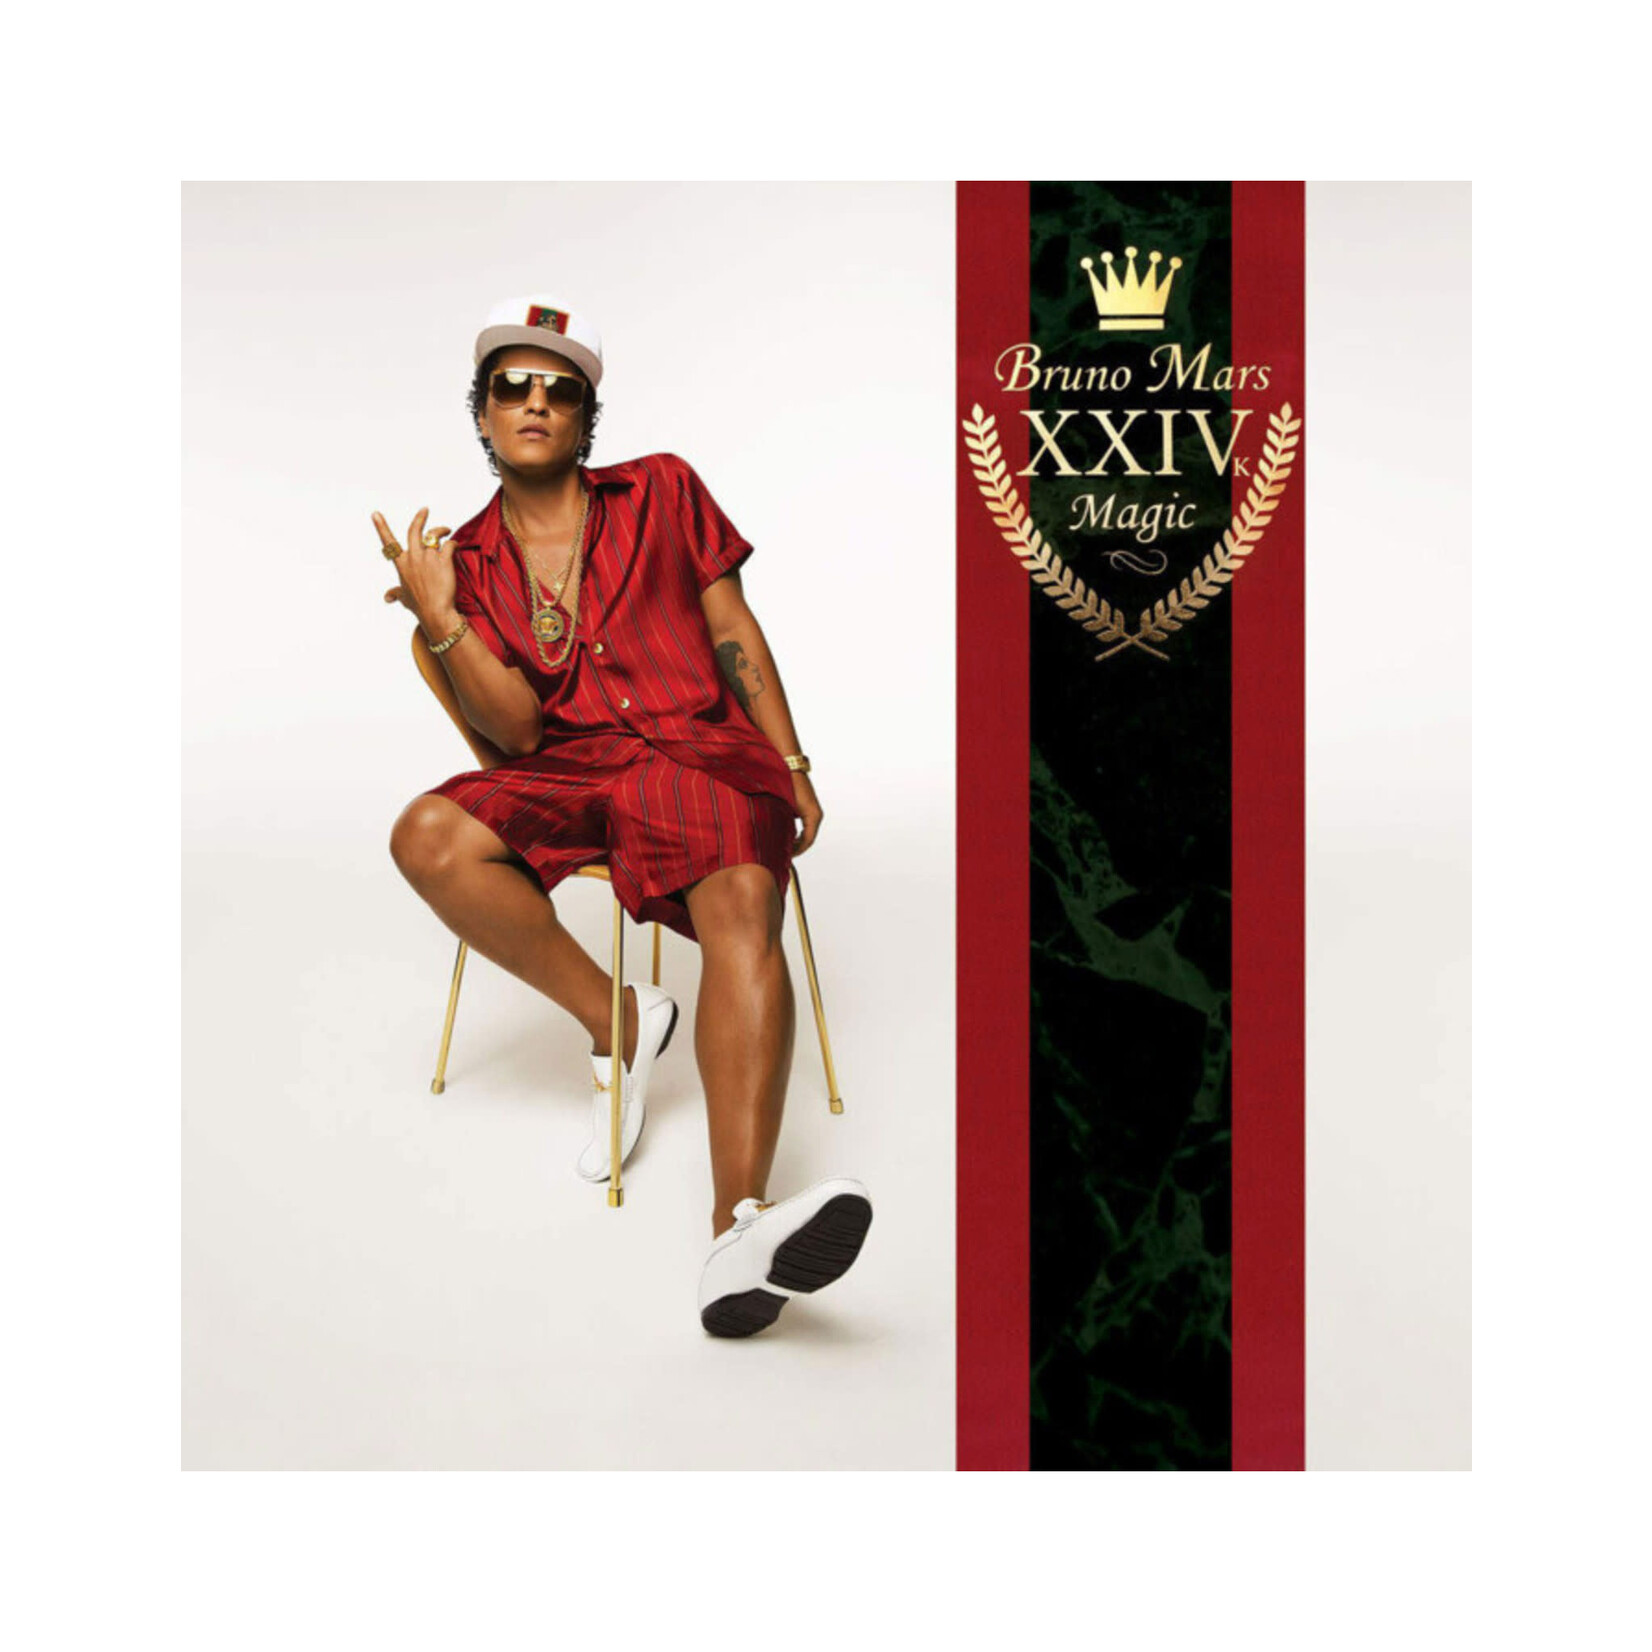 Bruno Mars - XXIVK Magic (nm) near mint